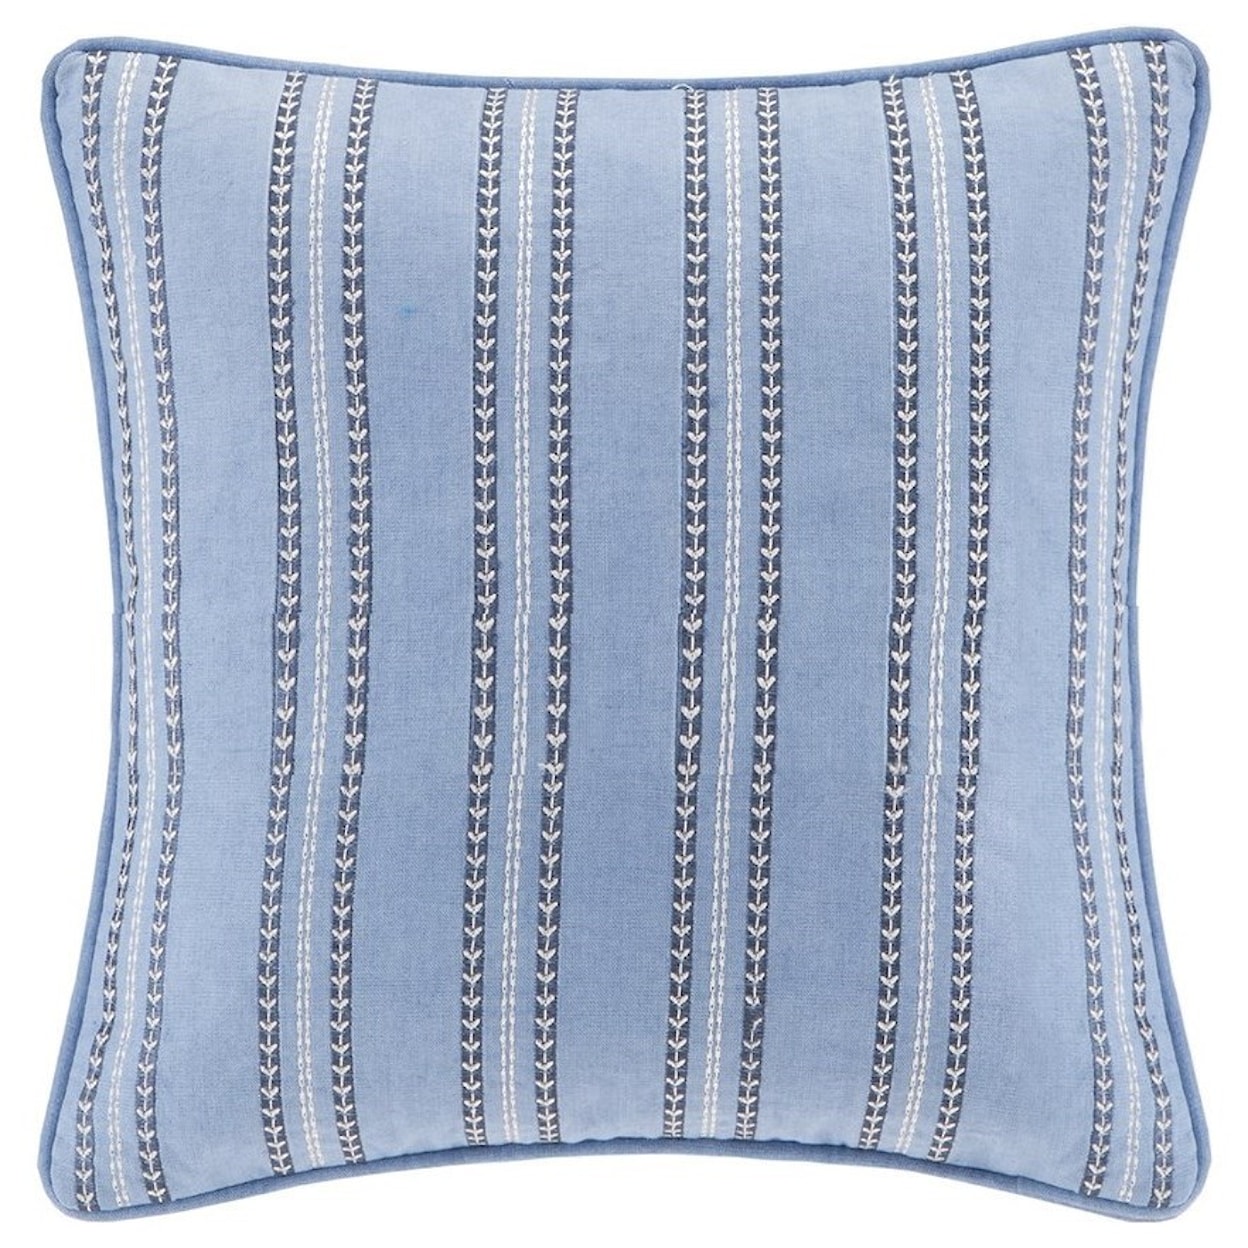 JLA Home Echo Design Striped Embroidery Square Pillow